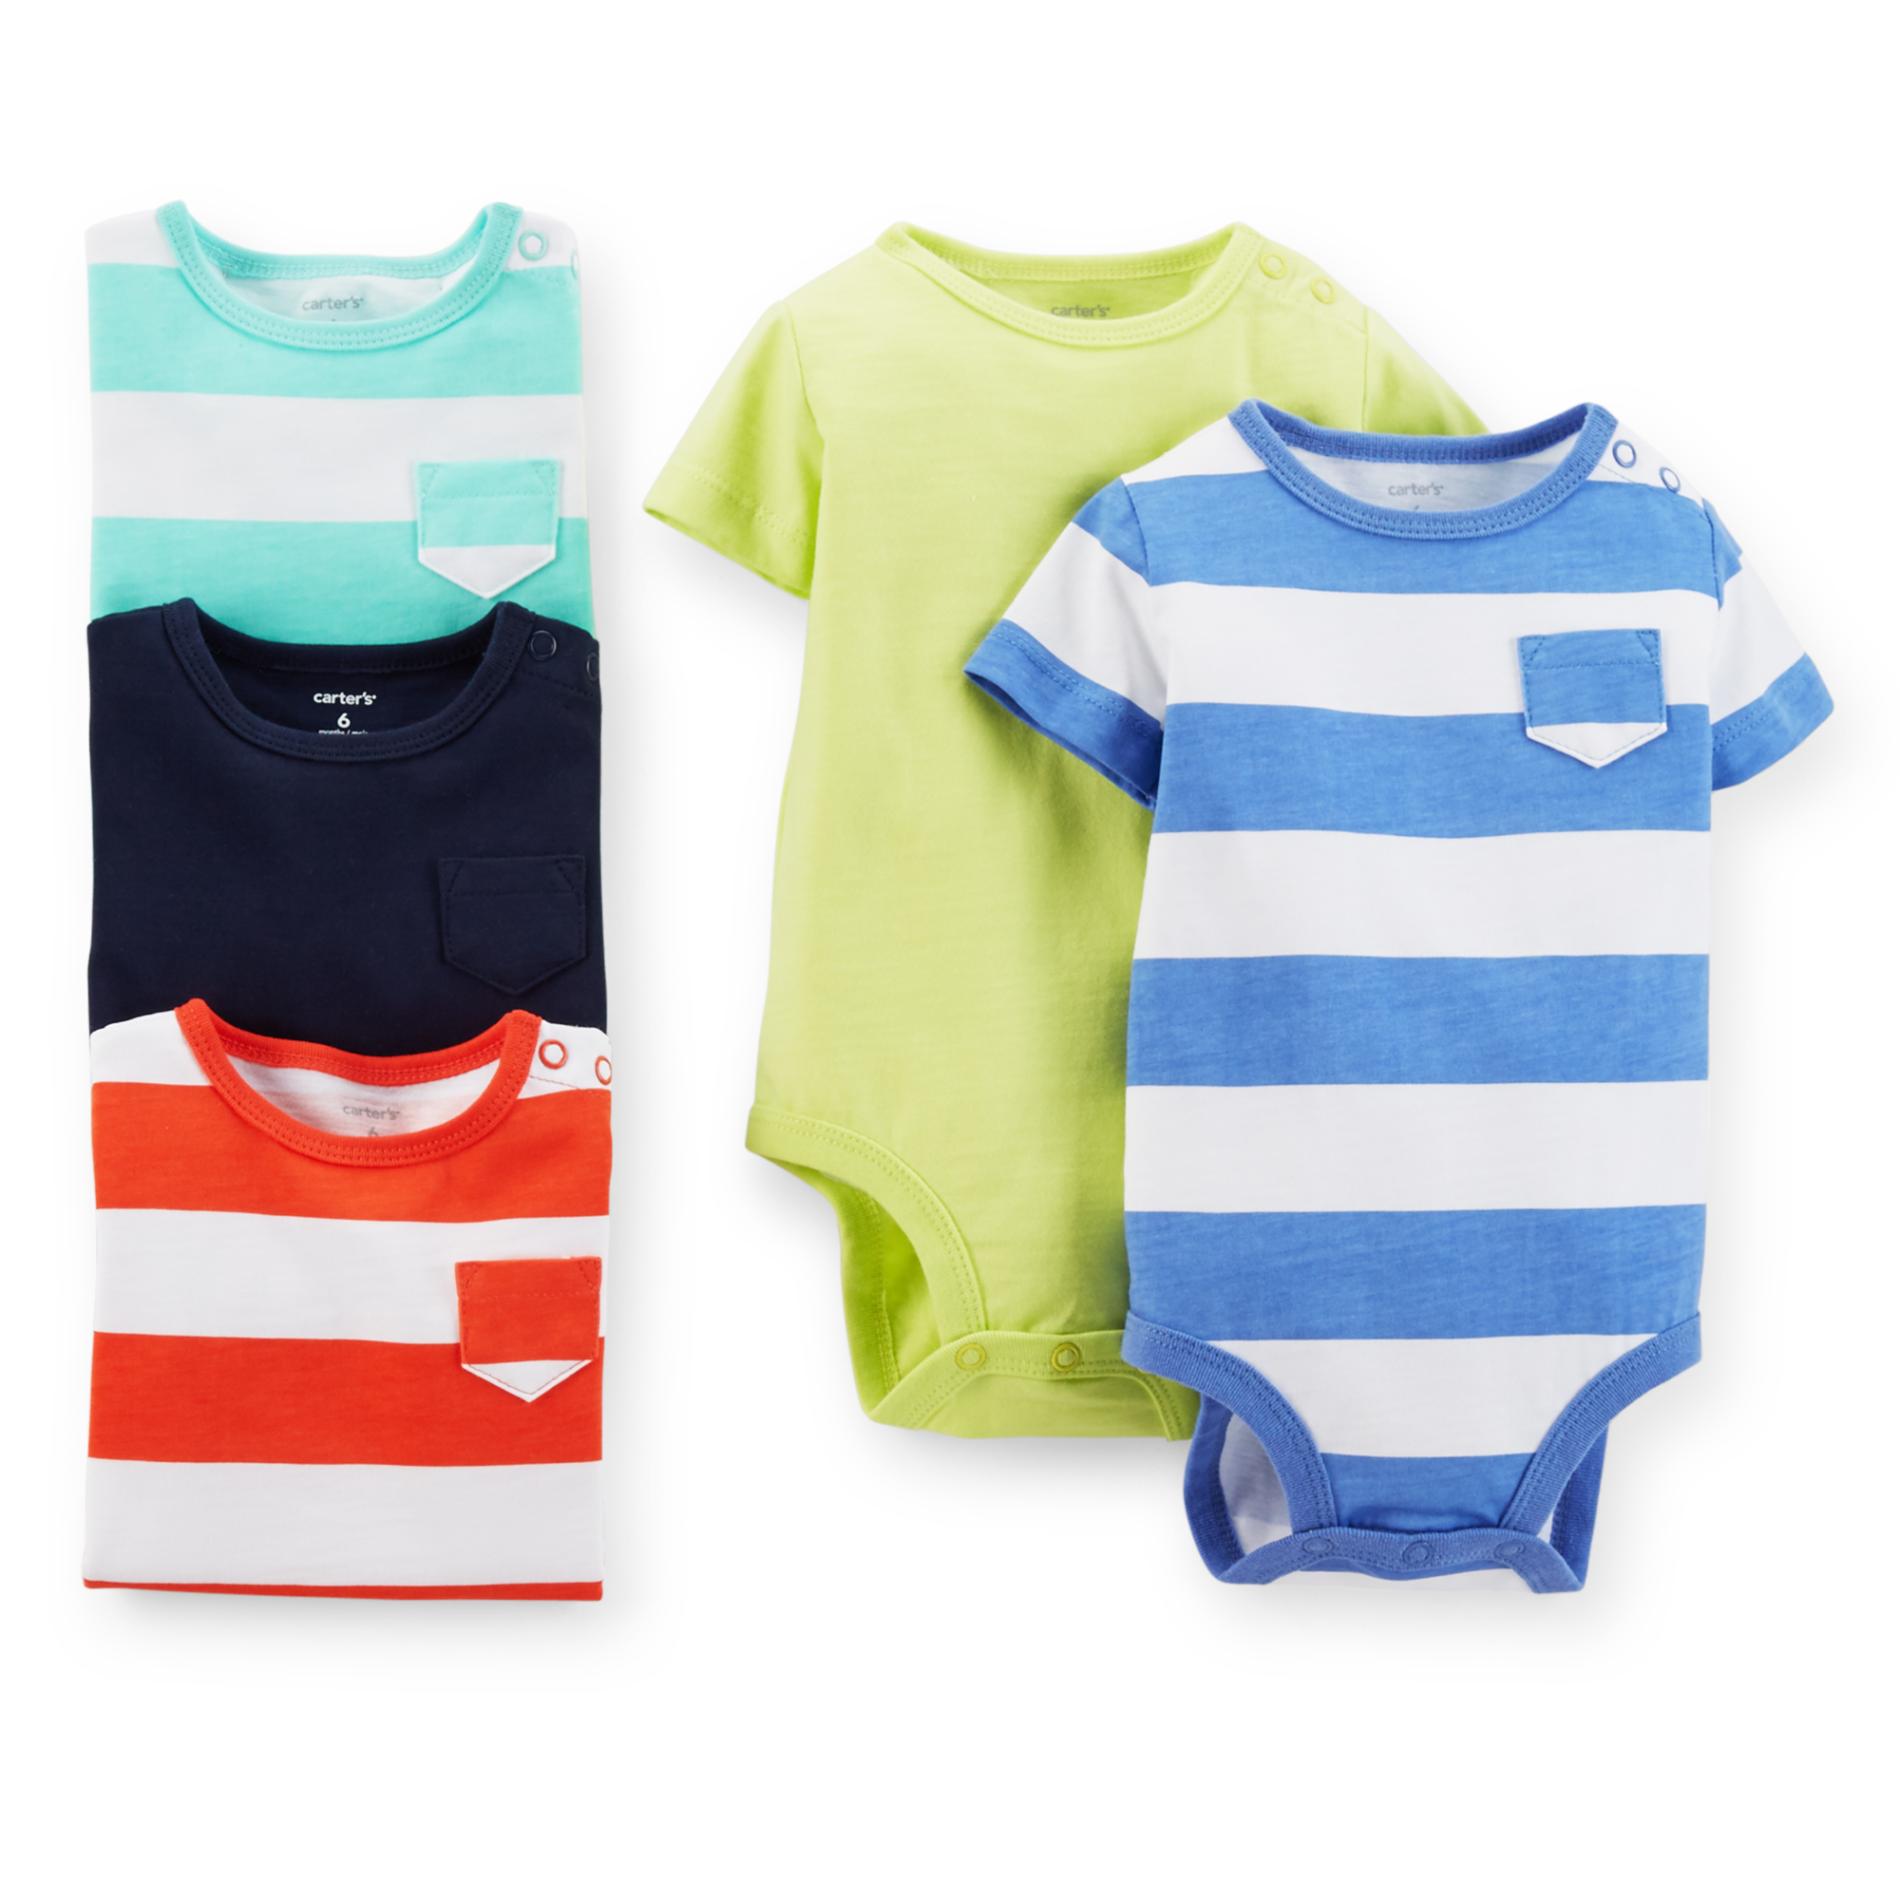 Carter's Newborn & Infant Boy's 5-Pack Bodysuits